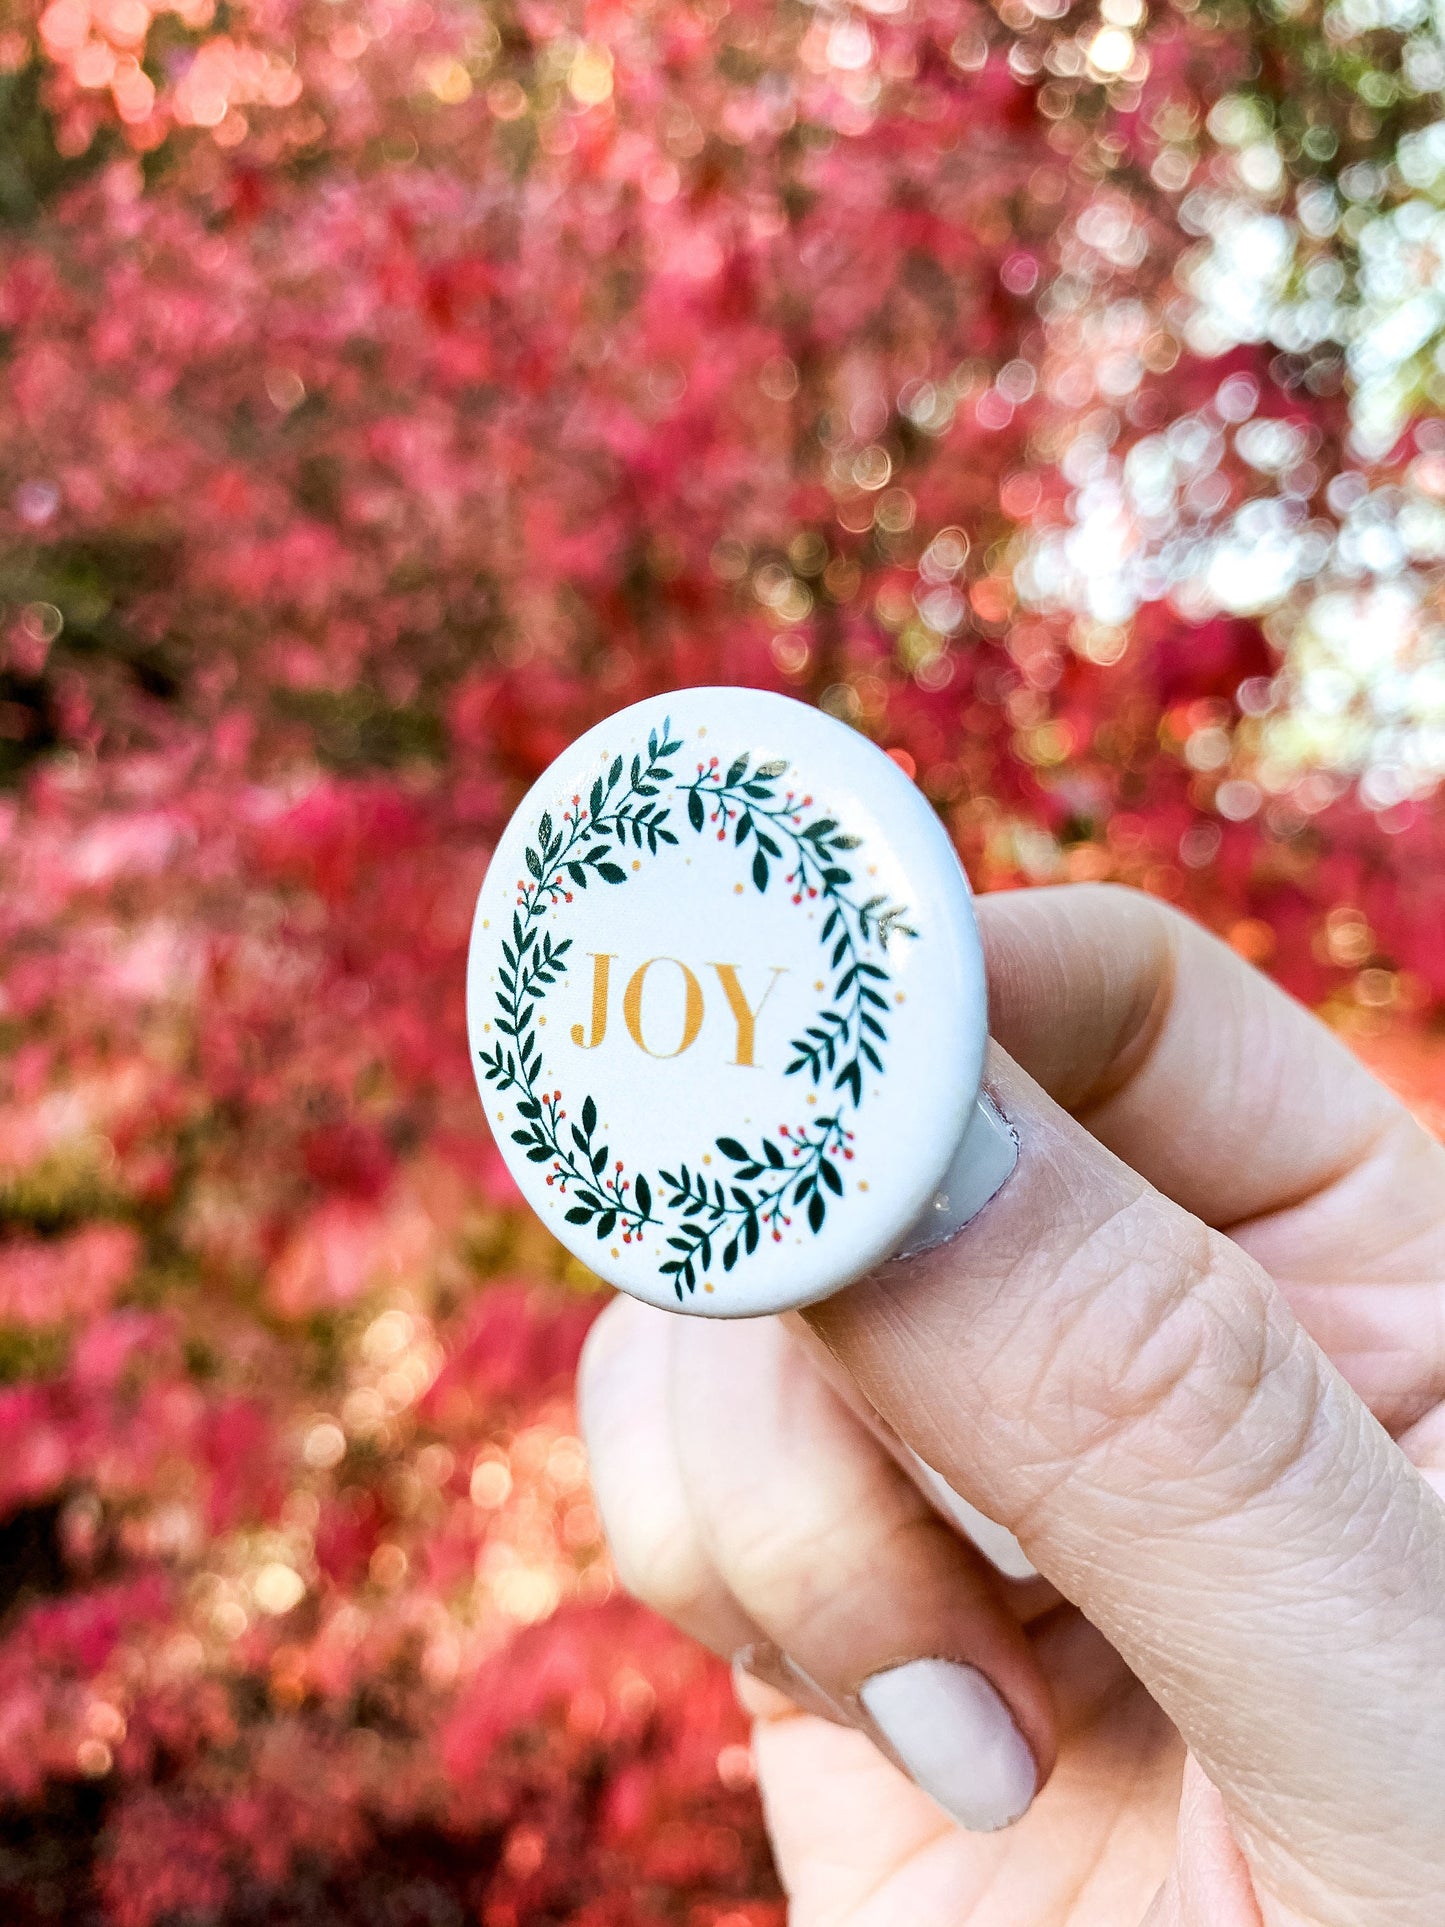 Joy Wreath 1.25" Pinback Buttons Pin